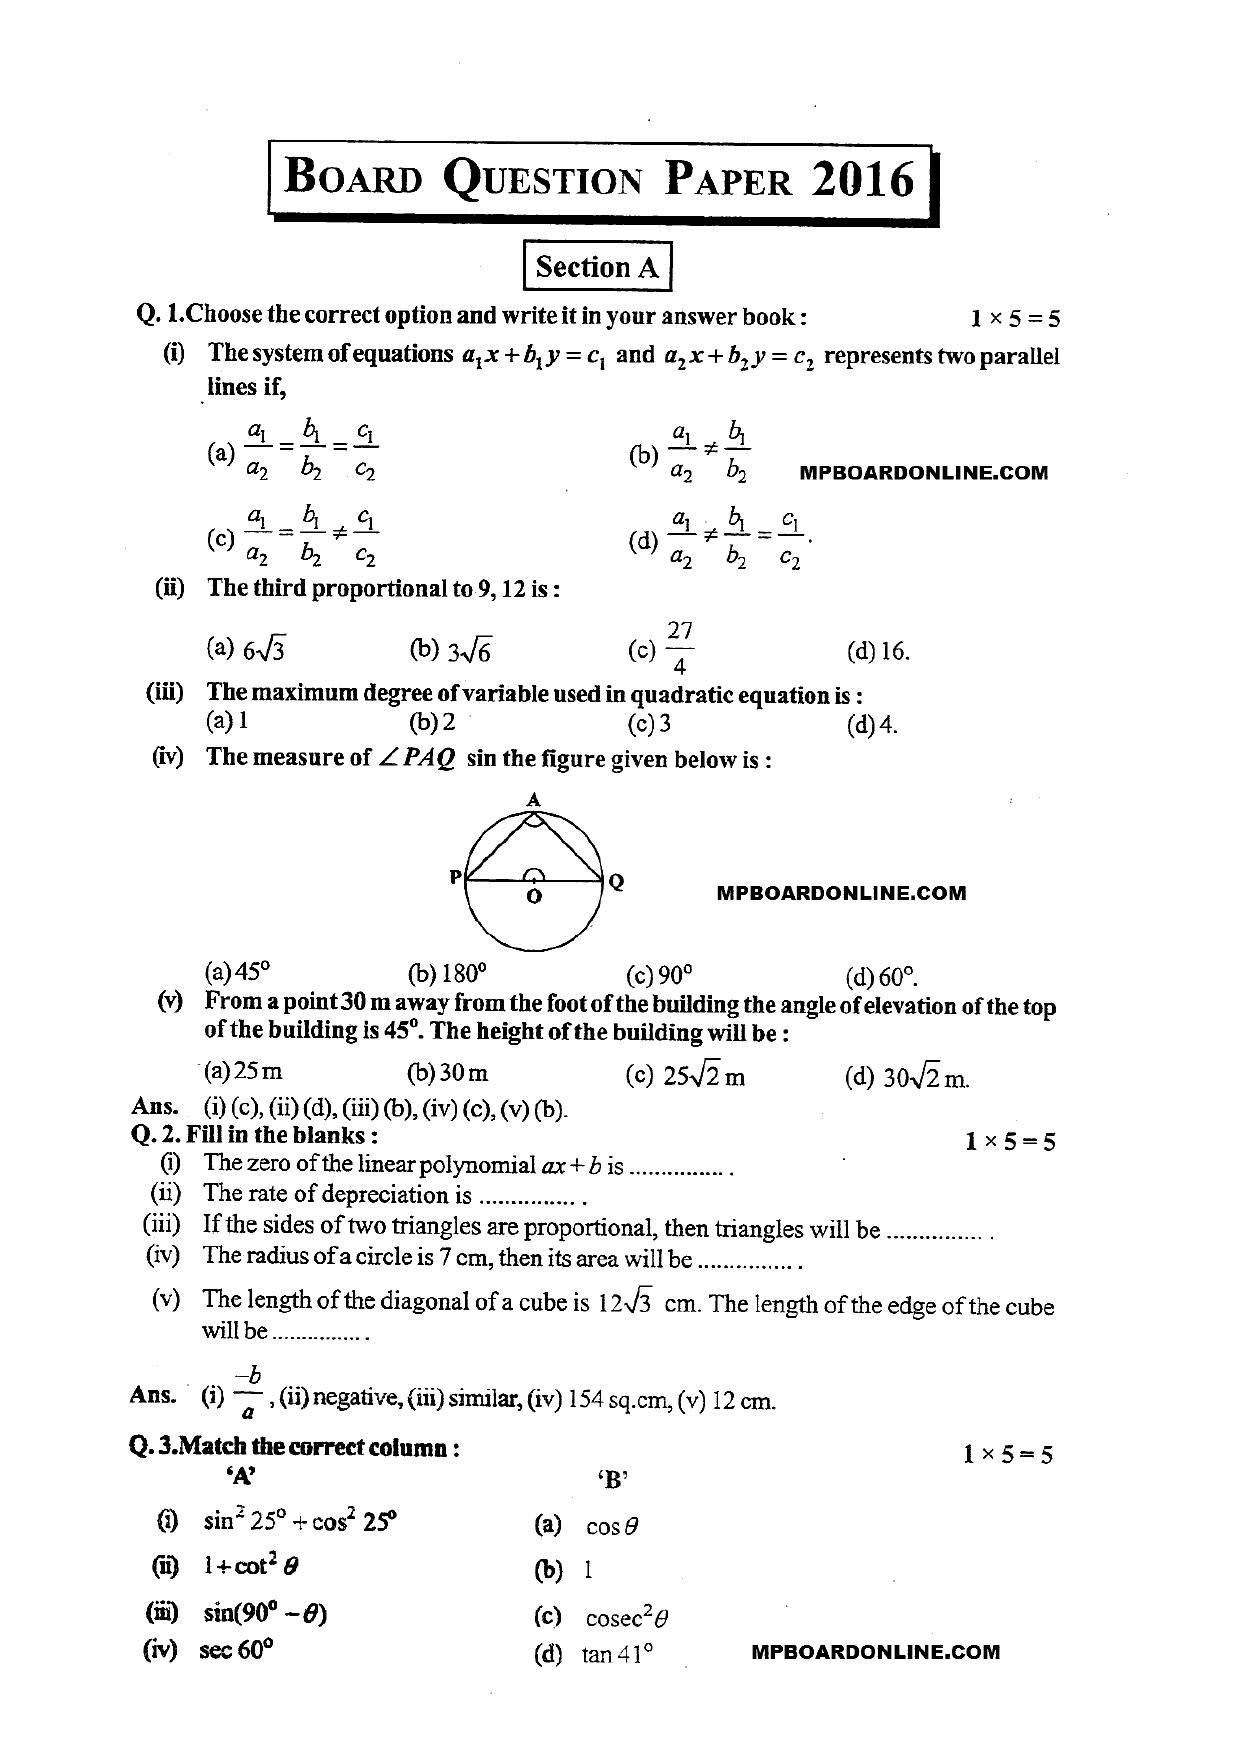 MP Board Class 10 Mathematica 2016 Question Paper - Page 1